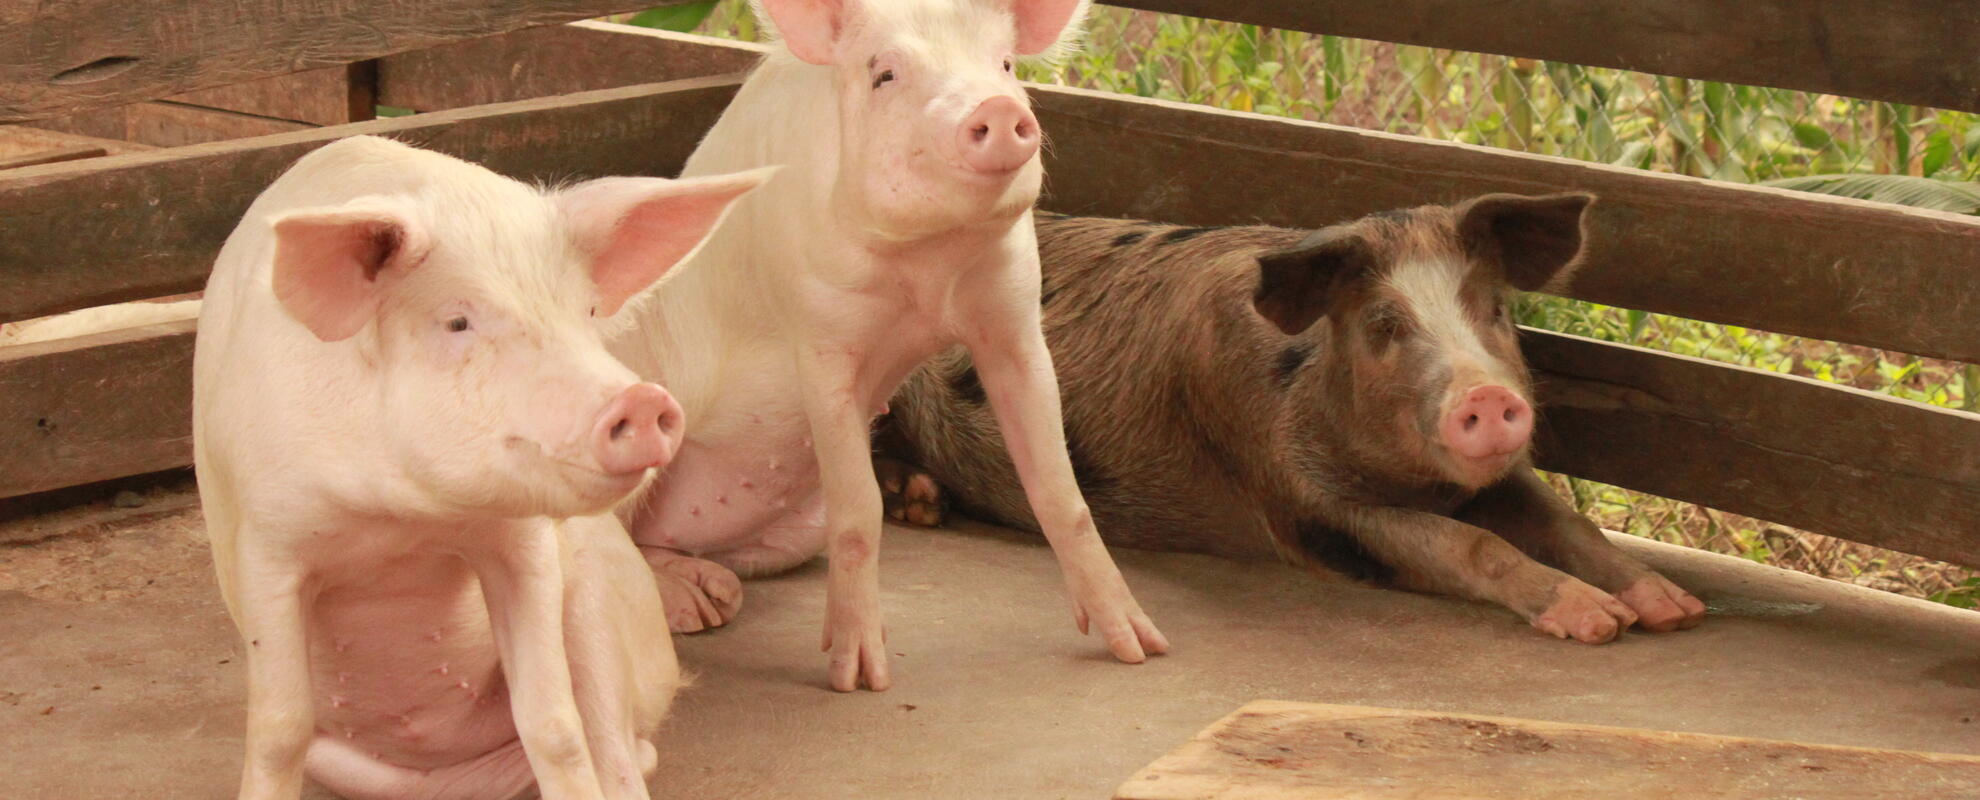 Improved pigs on a farm in Hoima district, Uganda